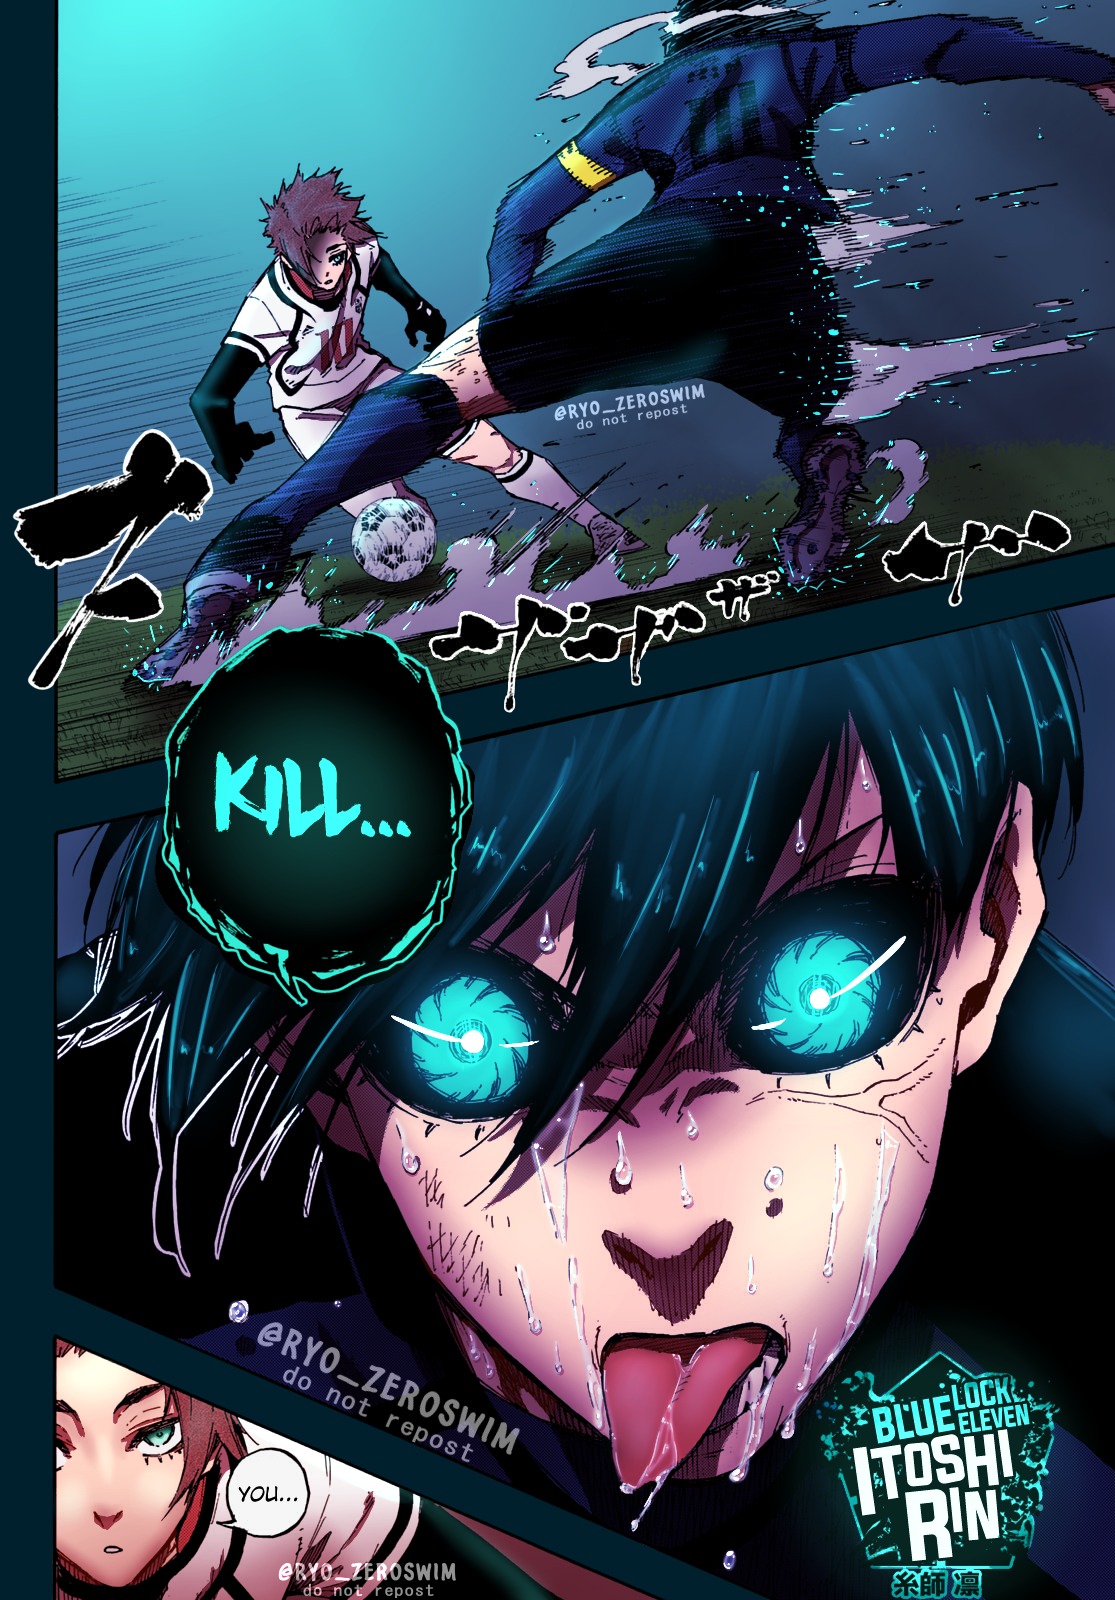 Blue Lock chapter 146 page 9 Manga Coloring 1 1 by ZeroSwim on